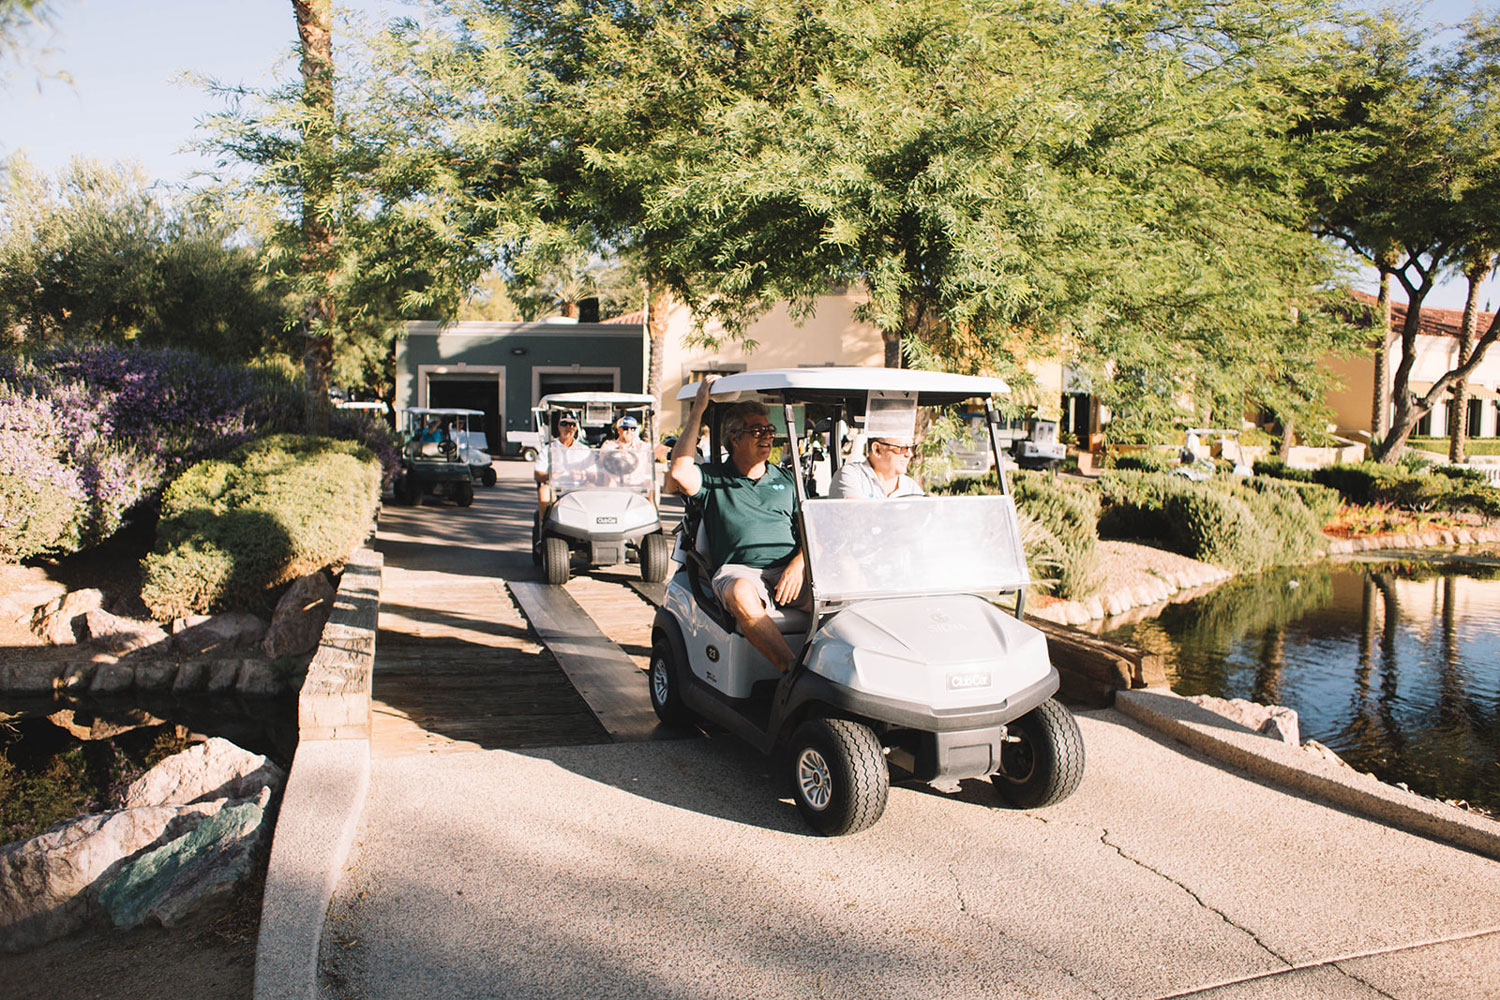 Golfers in golf carts